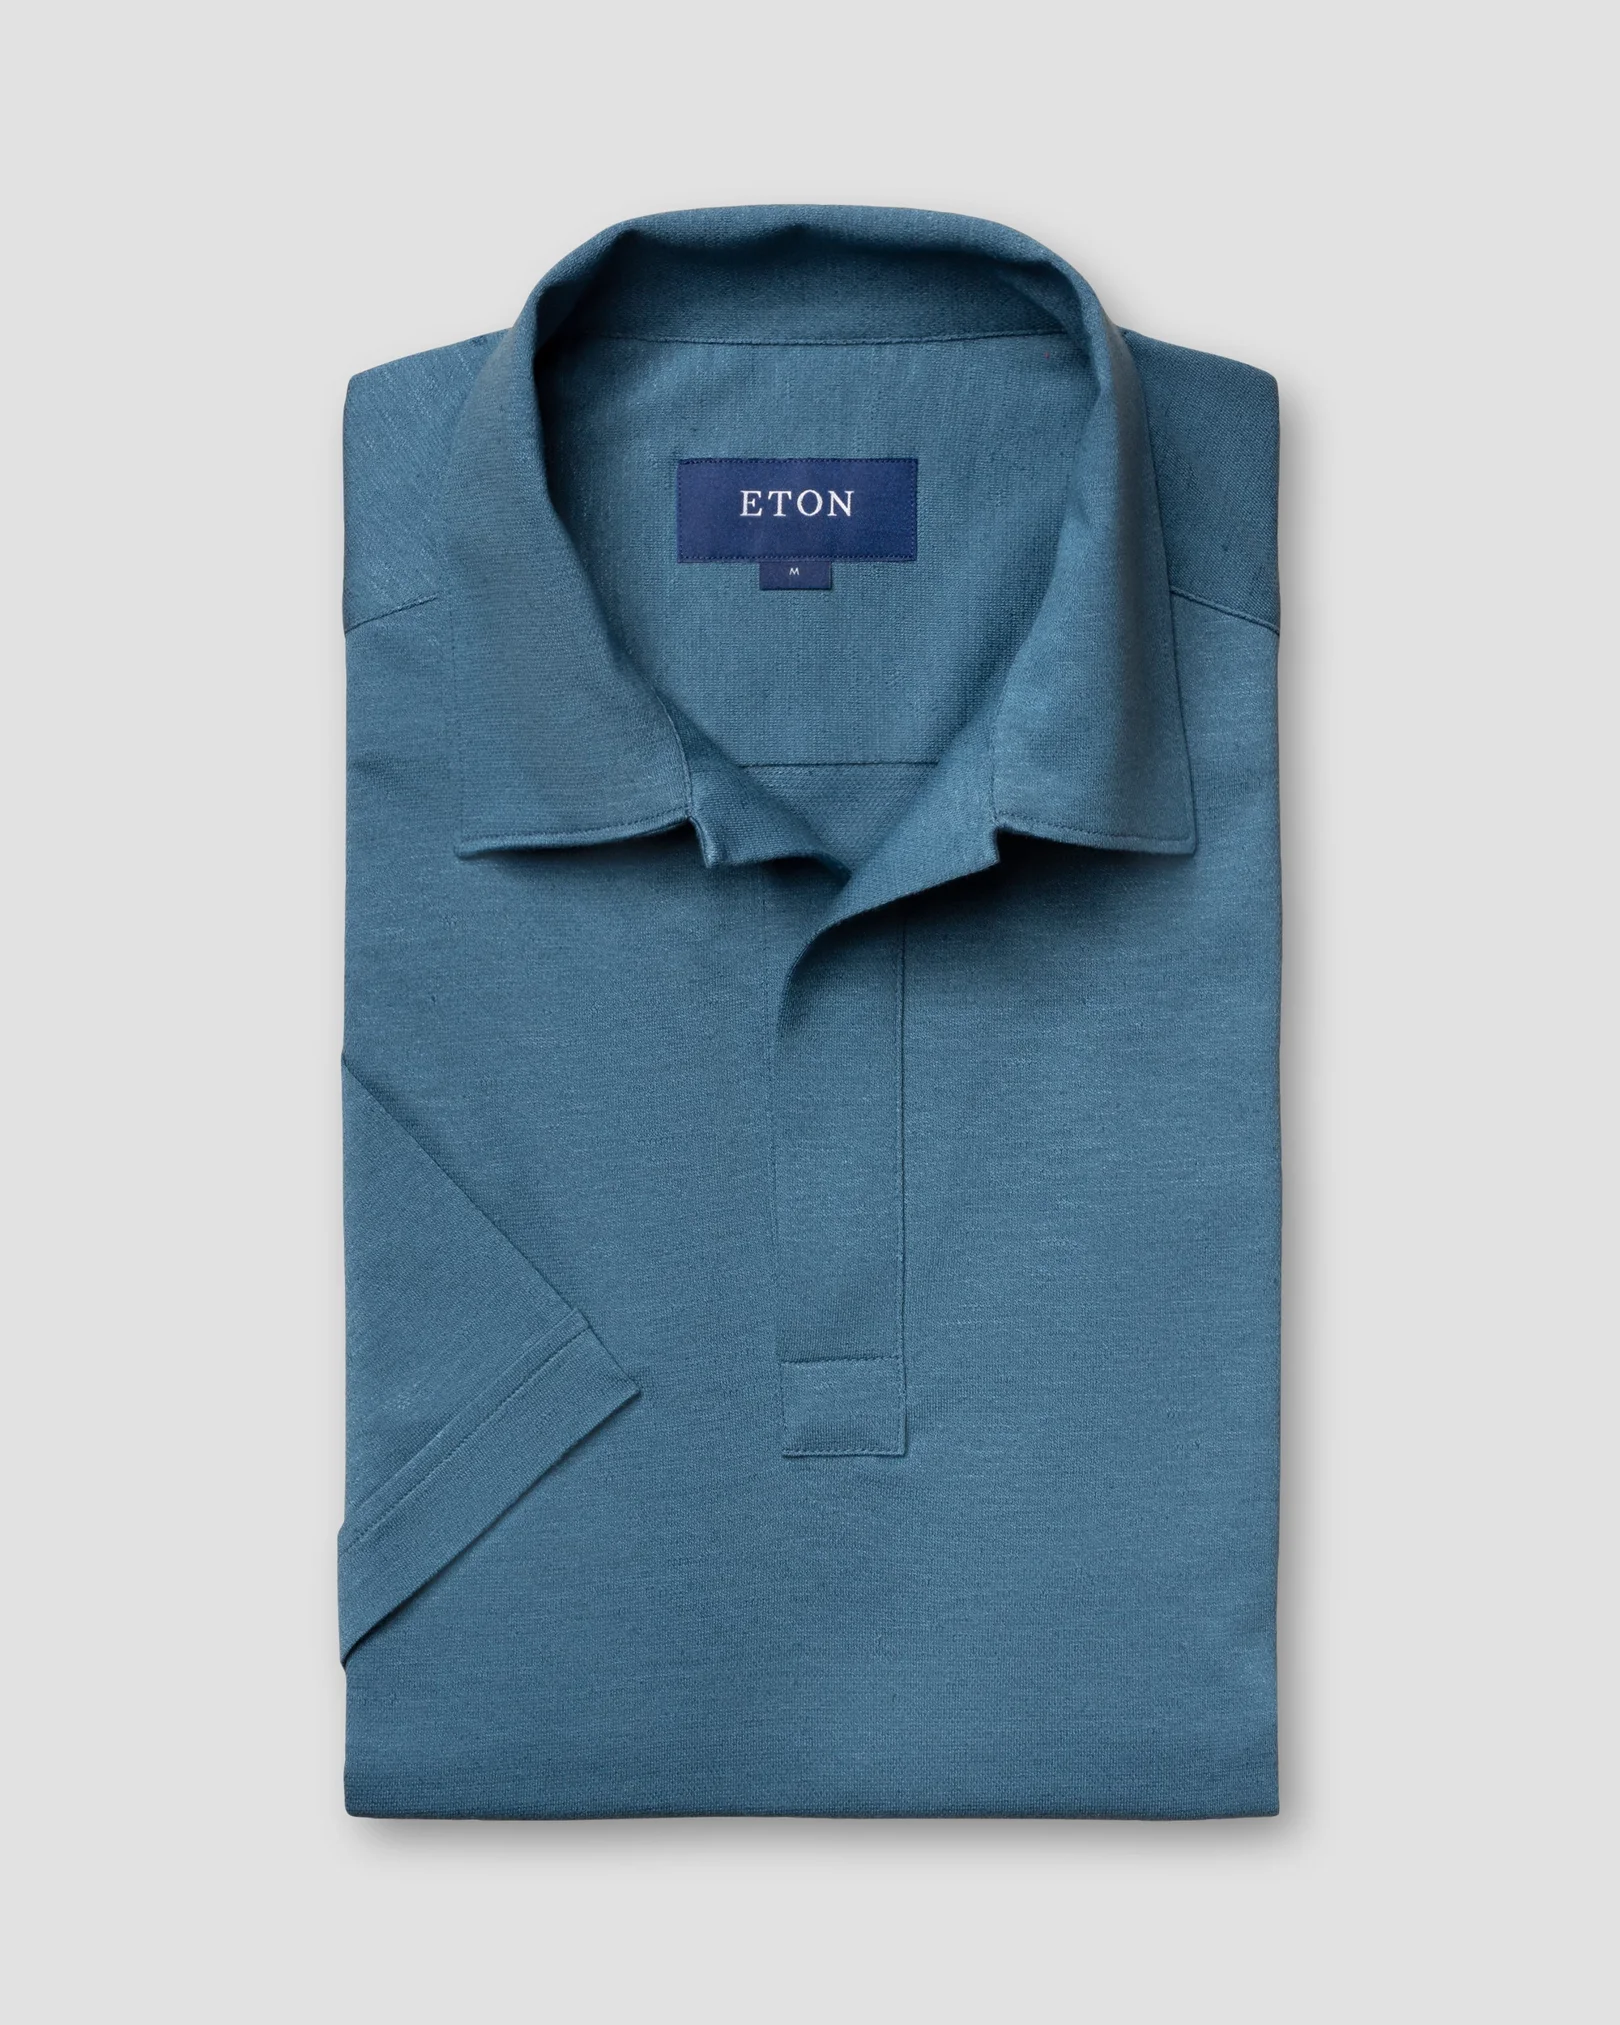 Eton - blue polo shirt open collar short sleeved